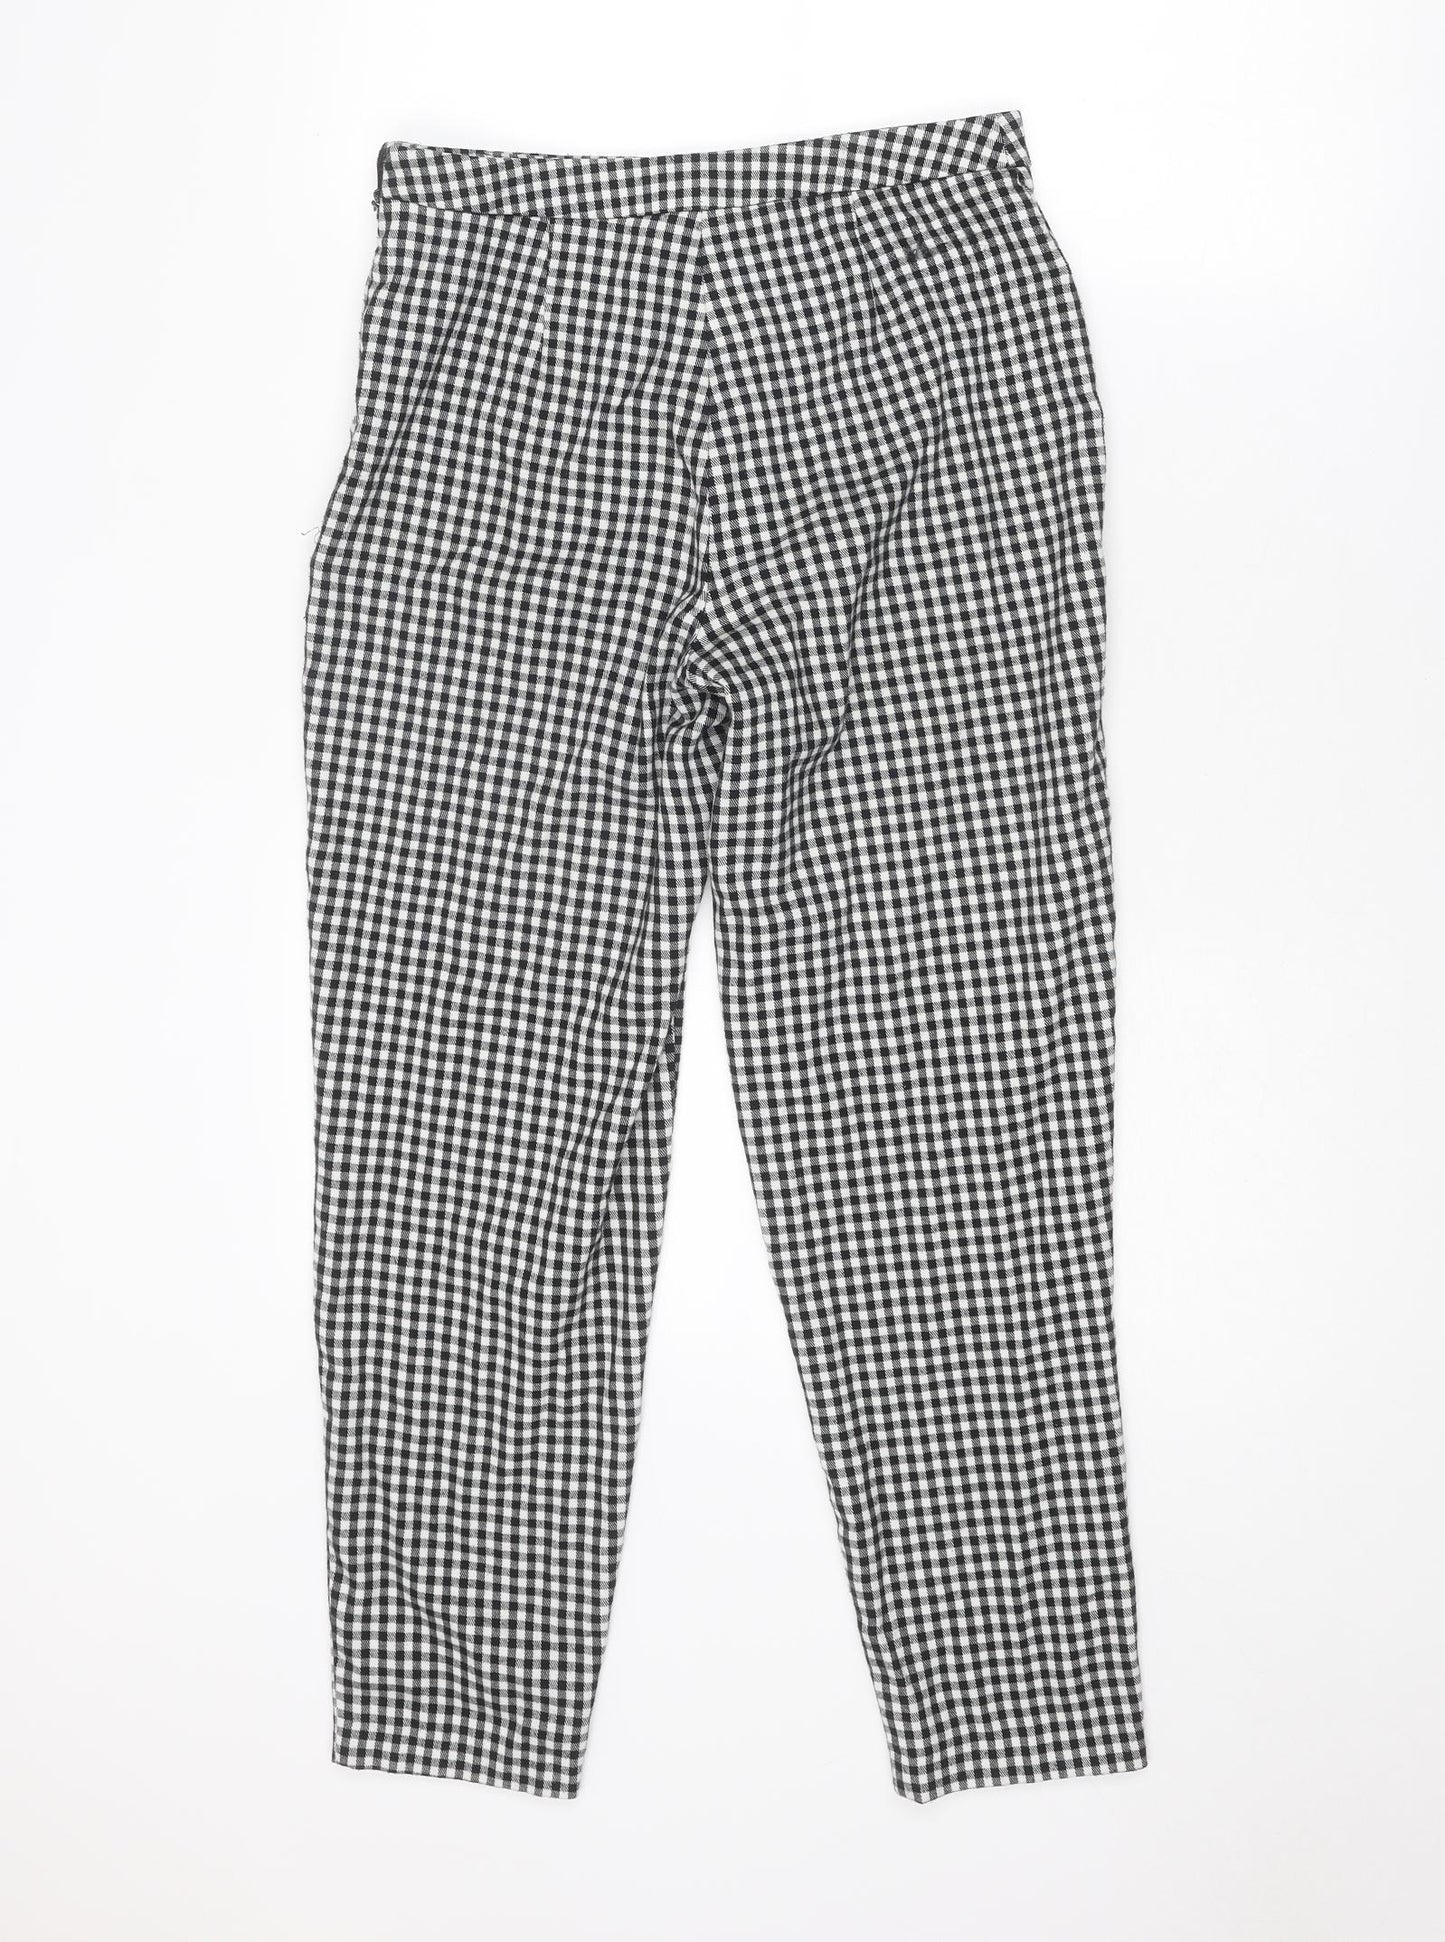 Miss Selfridge Womens Black Check Polyester Capri Trousers Size 8 Regular Zip